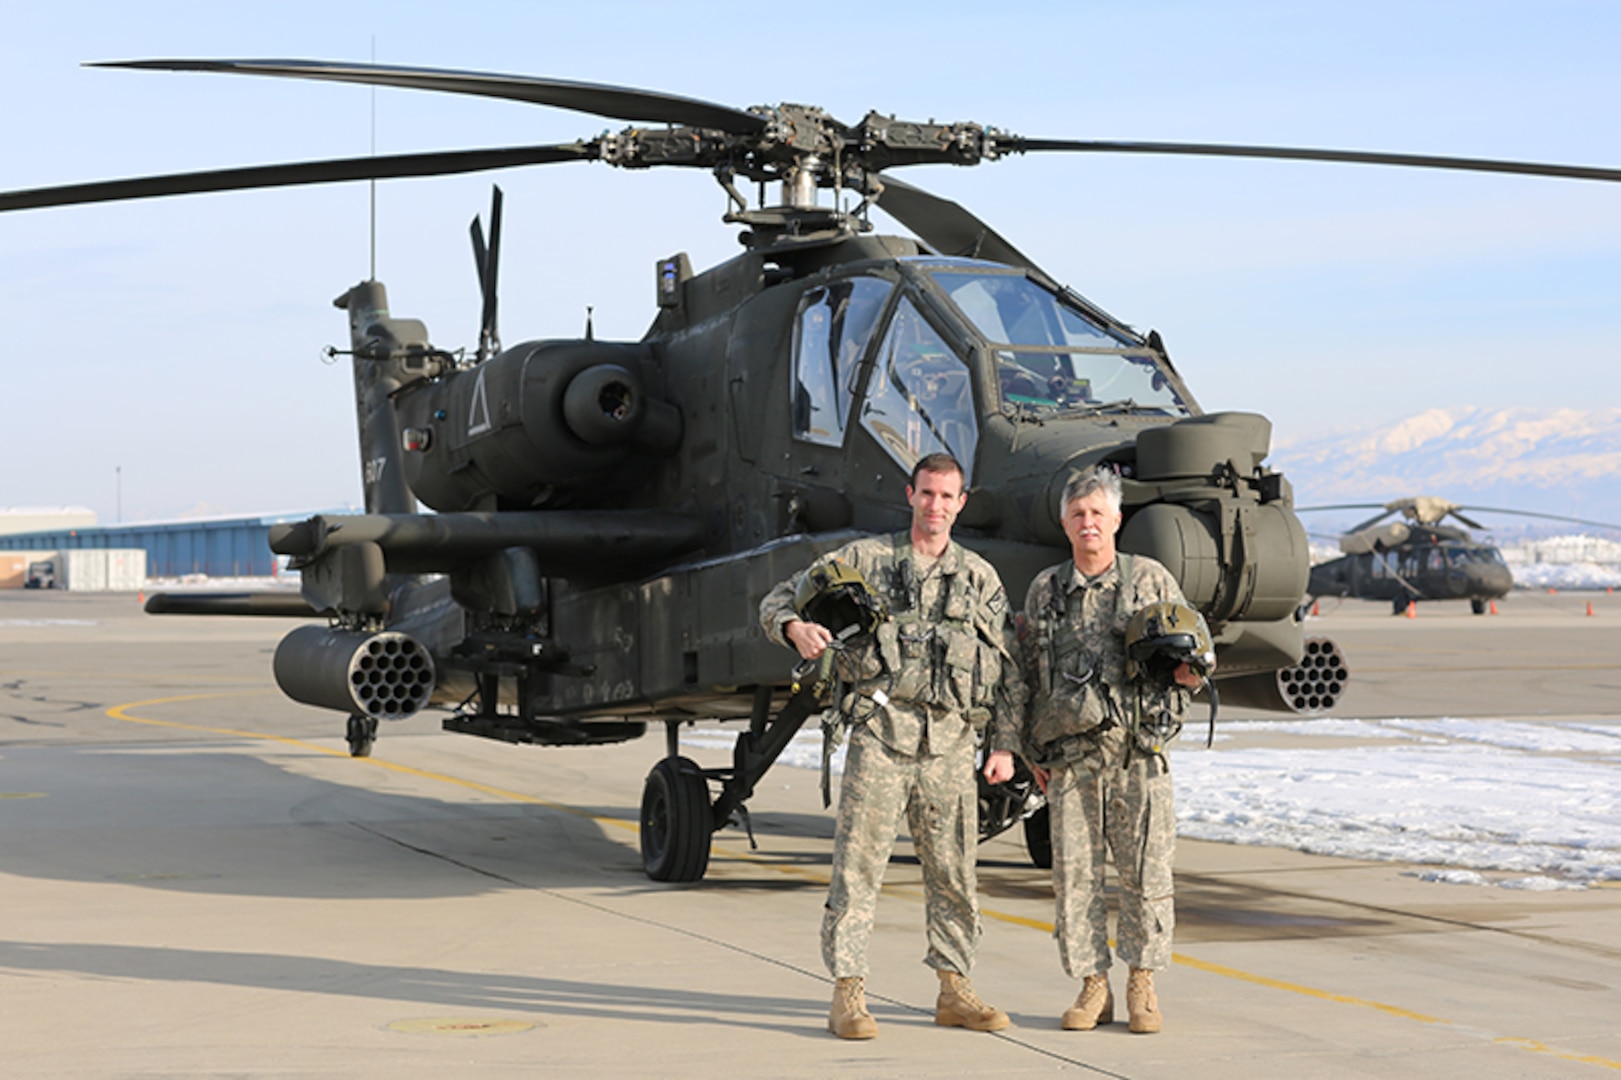 Chief Warrant Officer 5 Ken Jones, world record holder with 10,000 flight hours, has final flight in an AH-64 Apache with his son, Chief Warrant Officer 4 Jared Jones.
 
